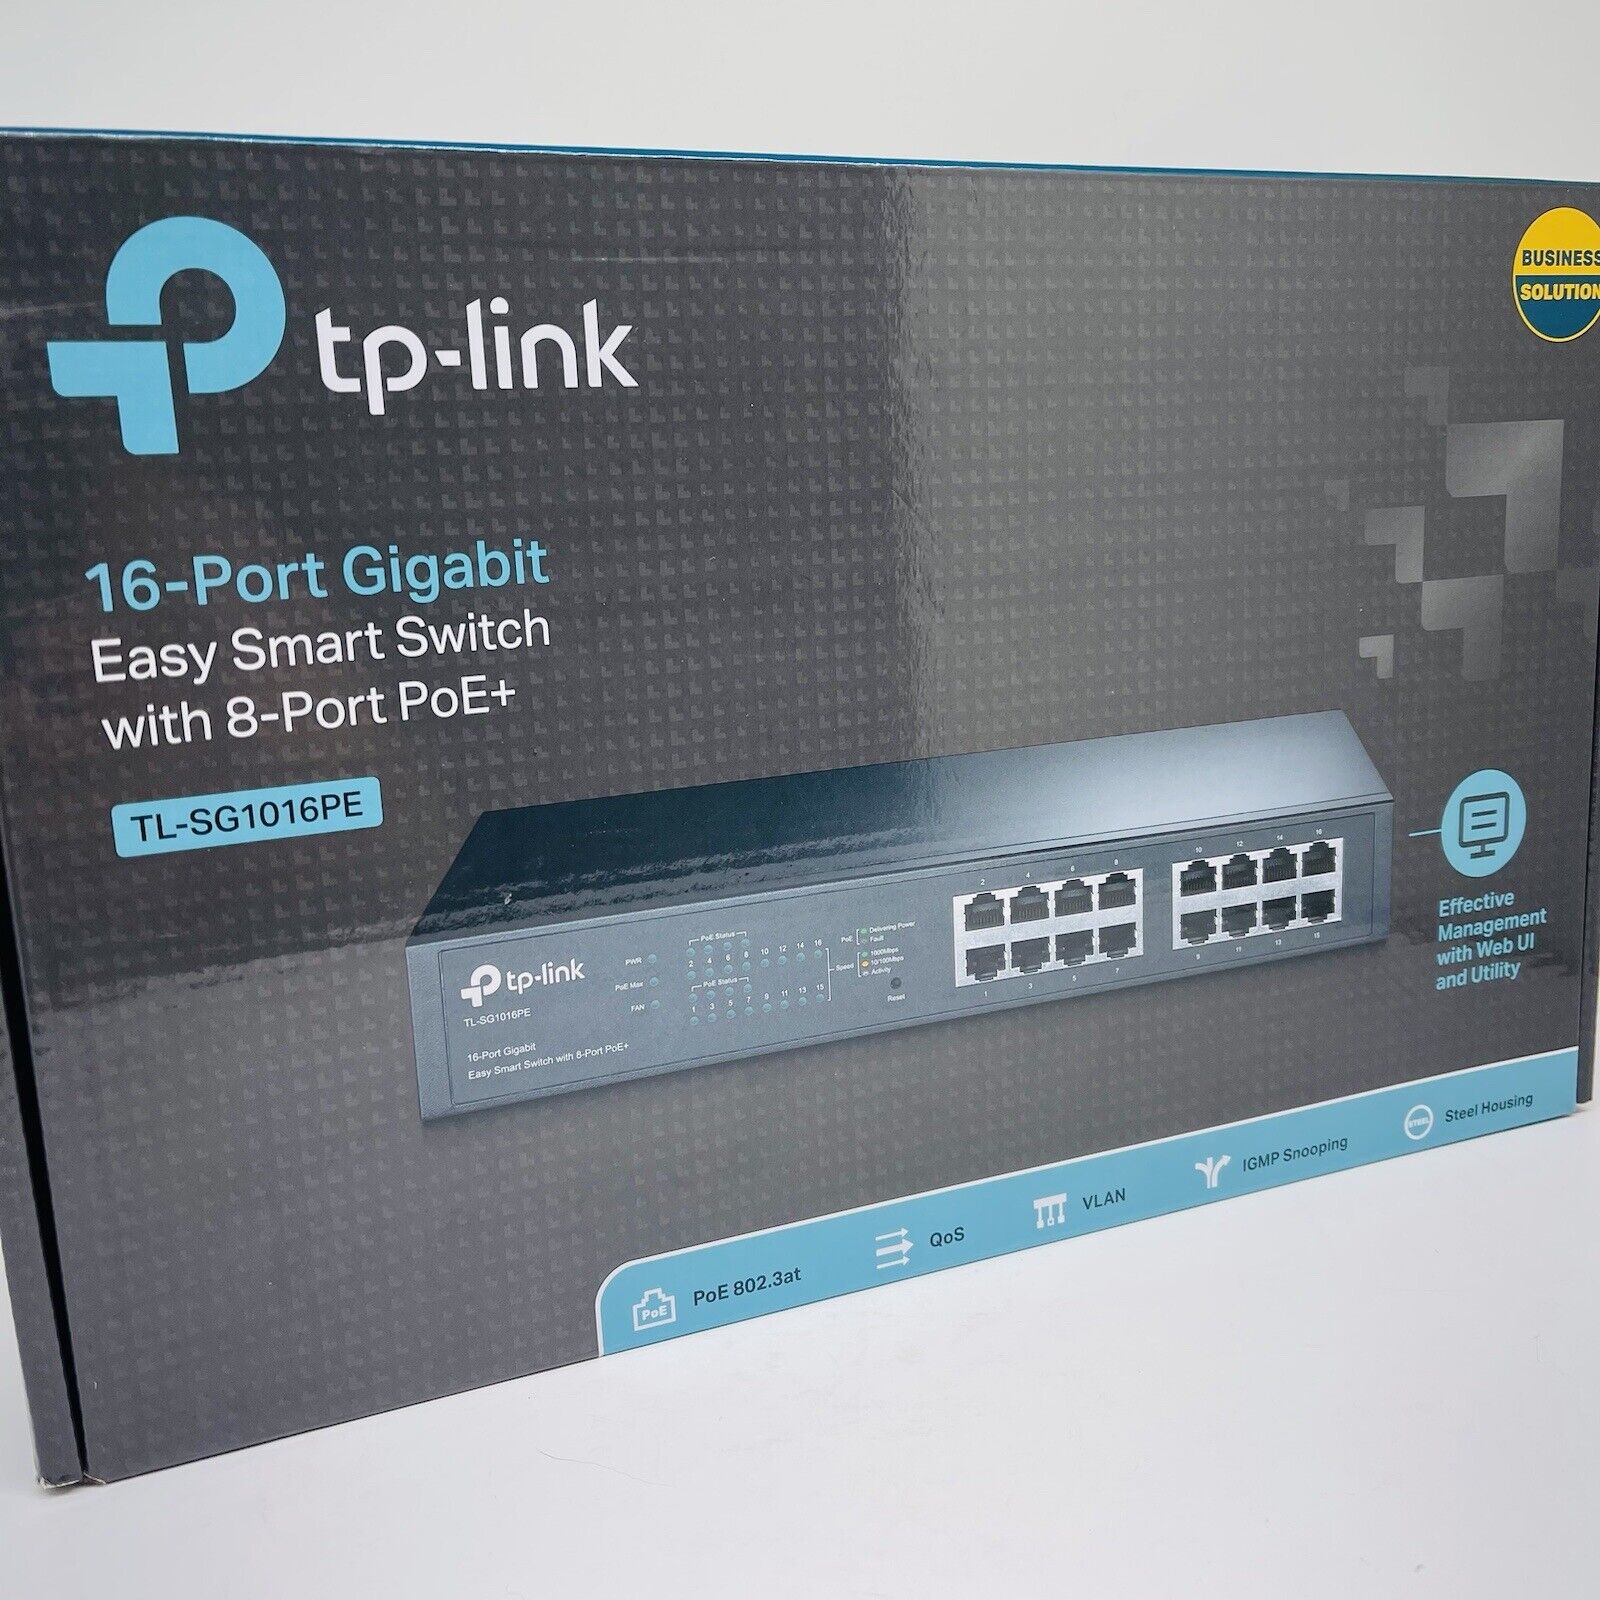 TP-LINK 16-Port Gigabit Easy Smart PoE Switch with 8-Port PoE+ FAST SHIPS FREE